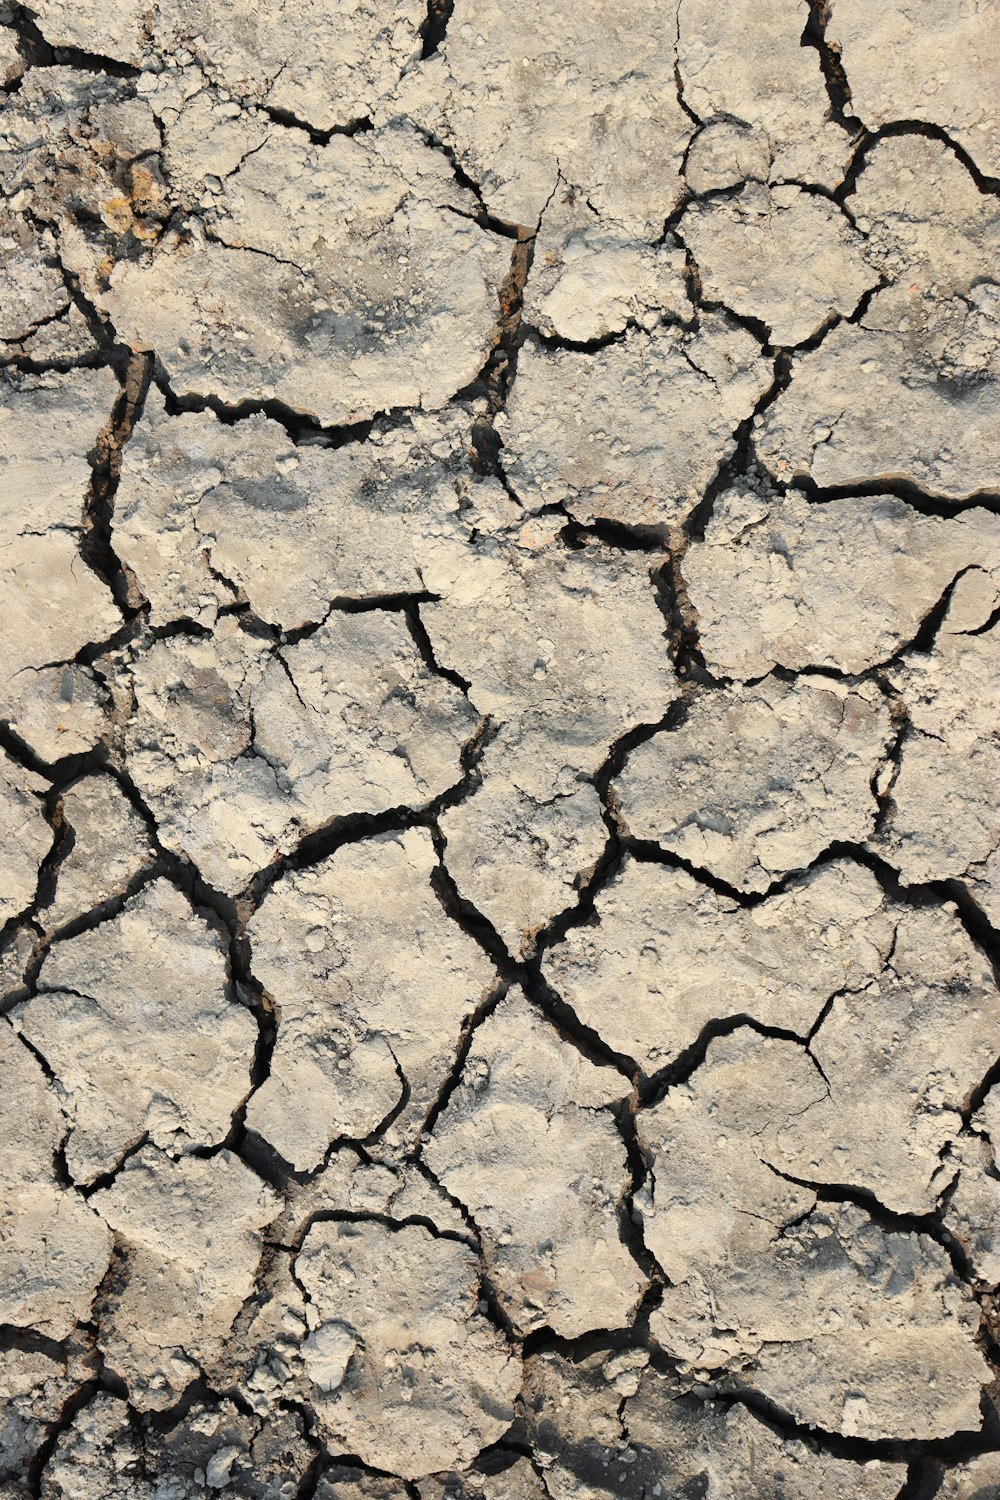 a close up of a dirt ground with cracks